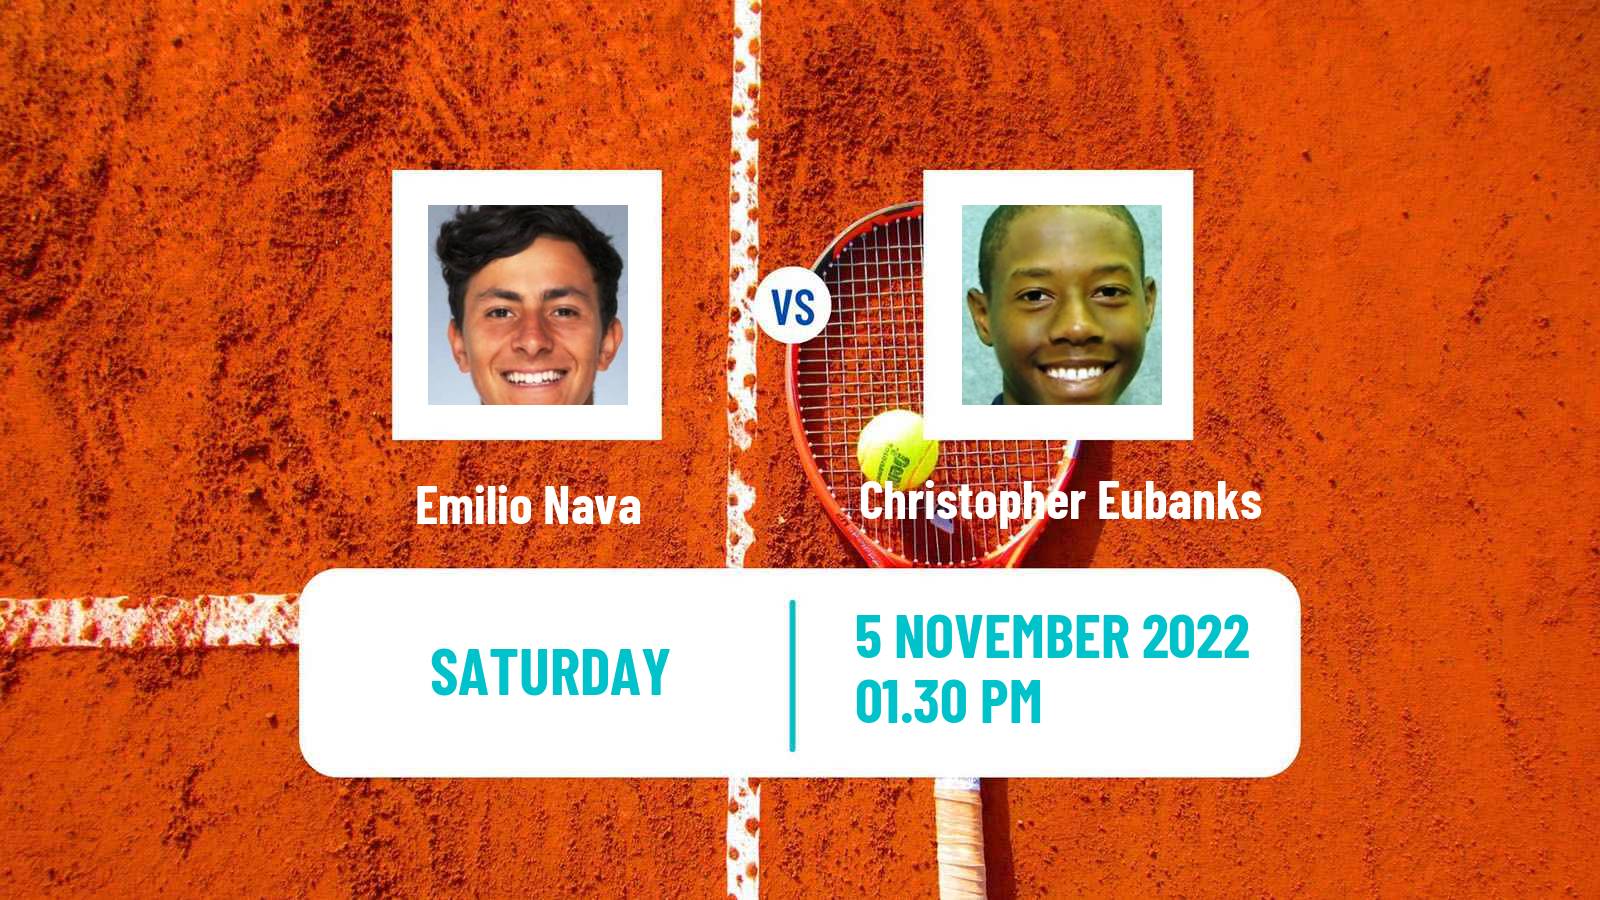 Tennis ATP Challenger Emilio Nava - Christopher Eubanks